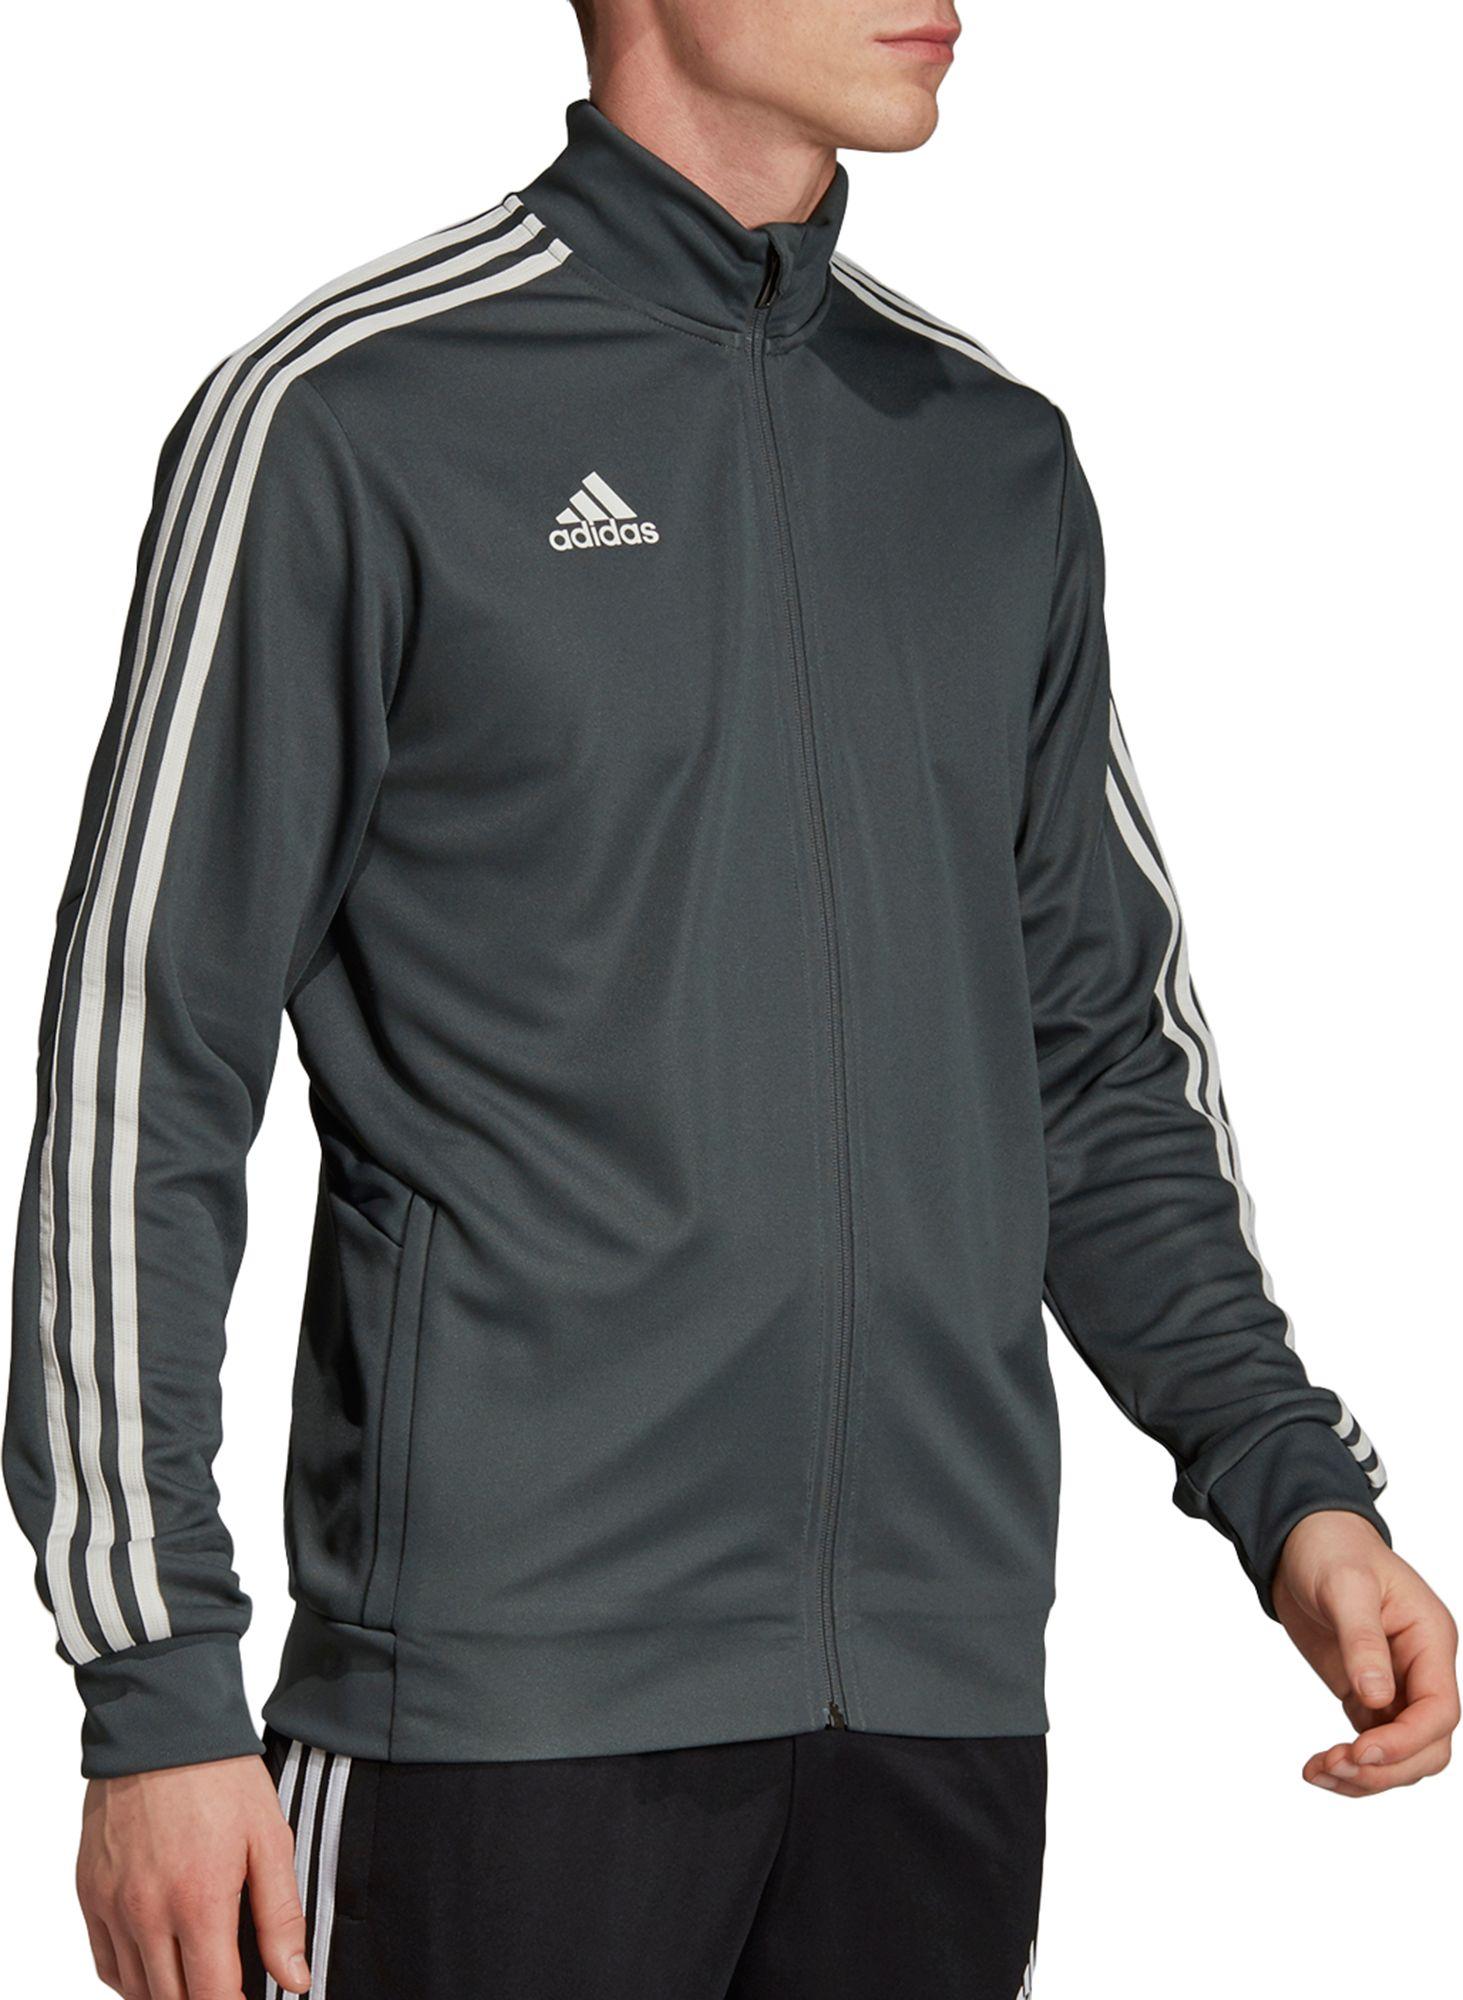 adidas Tiro 19 Soccer Training Jacket for Men - Lyst